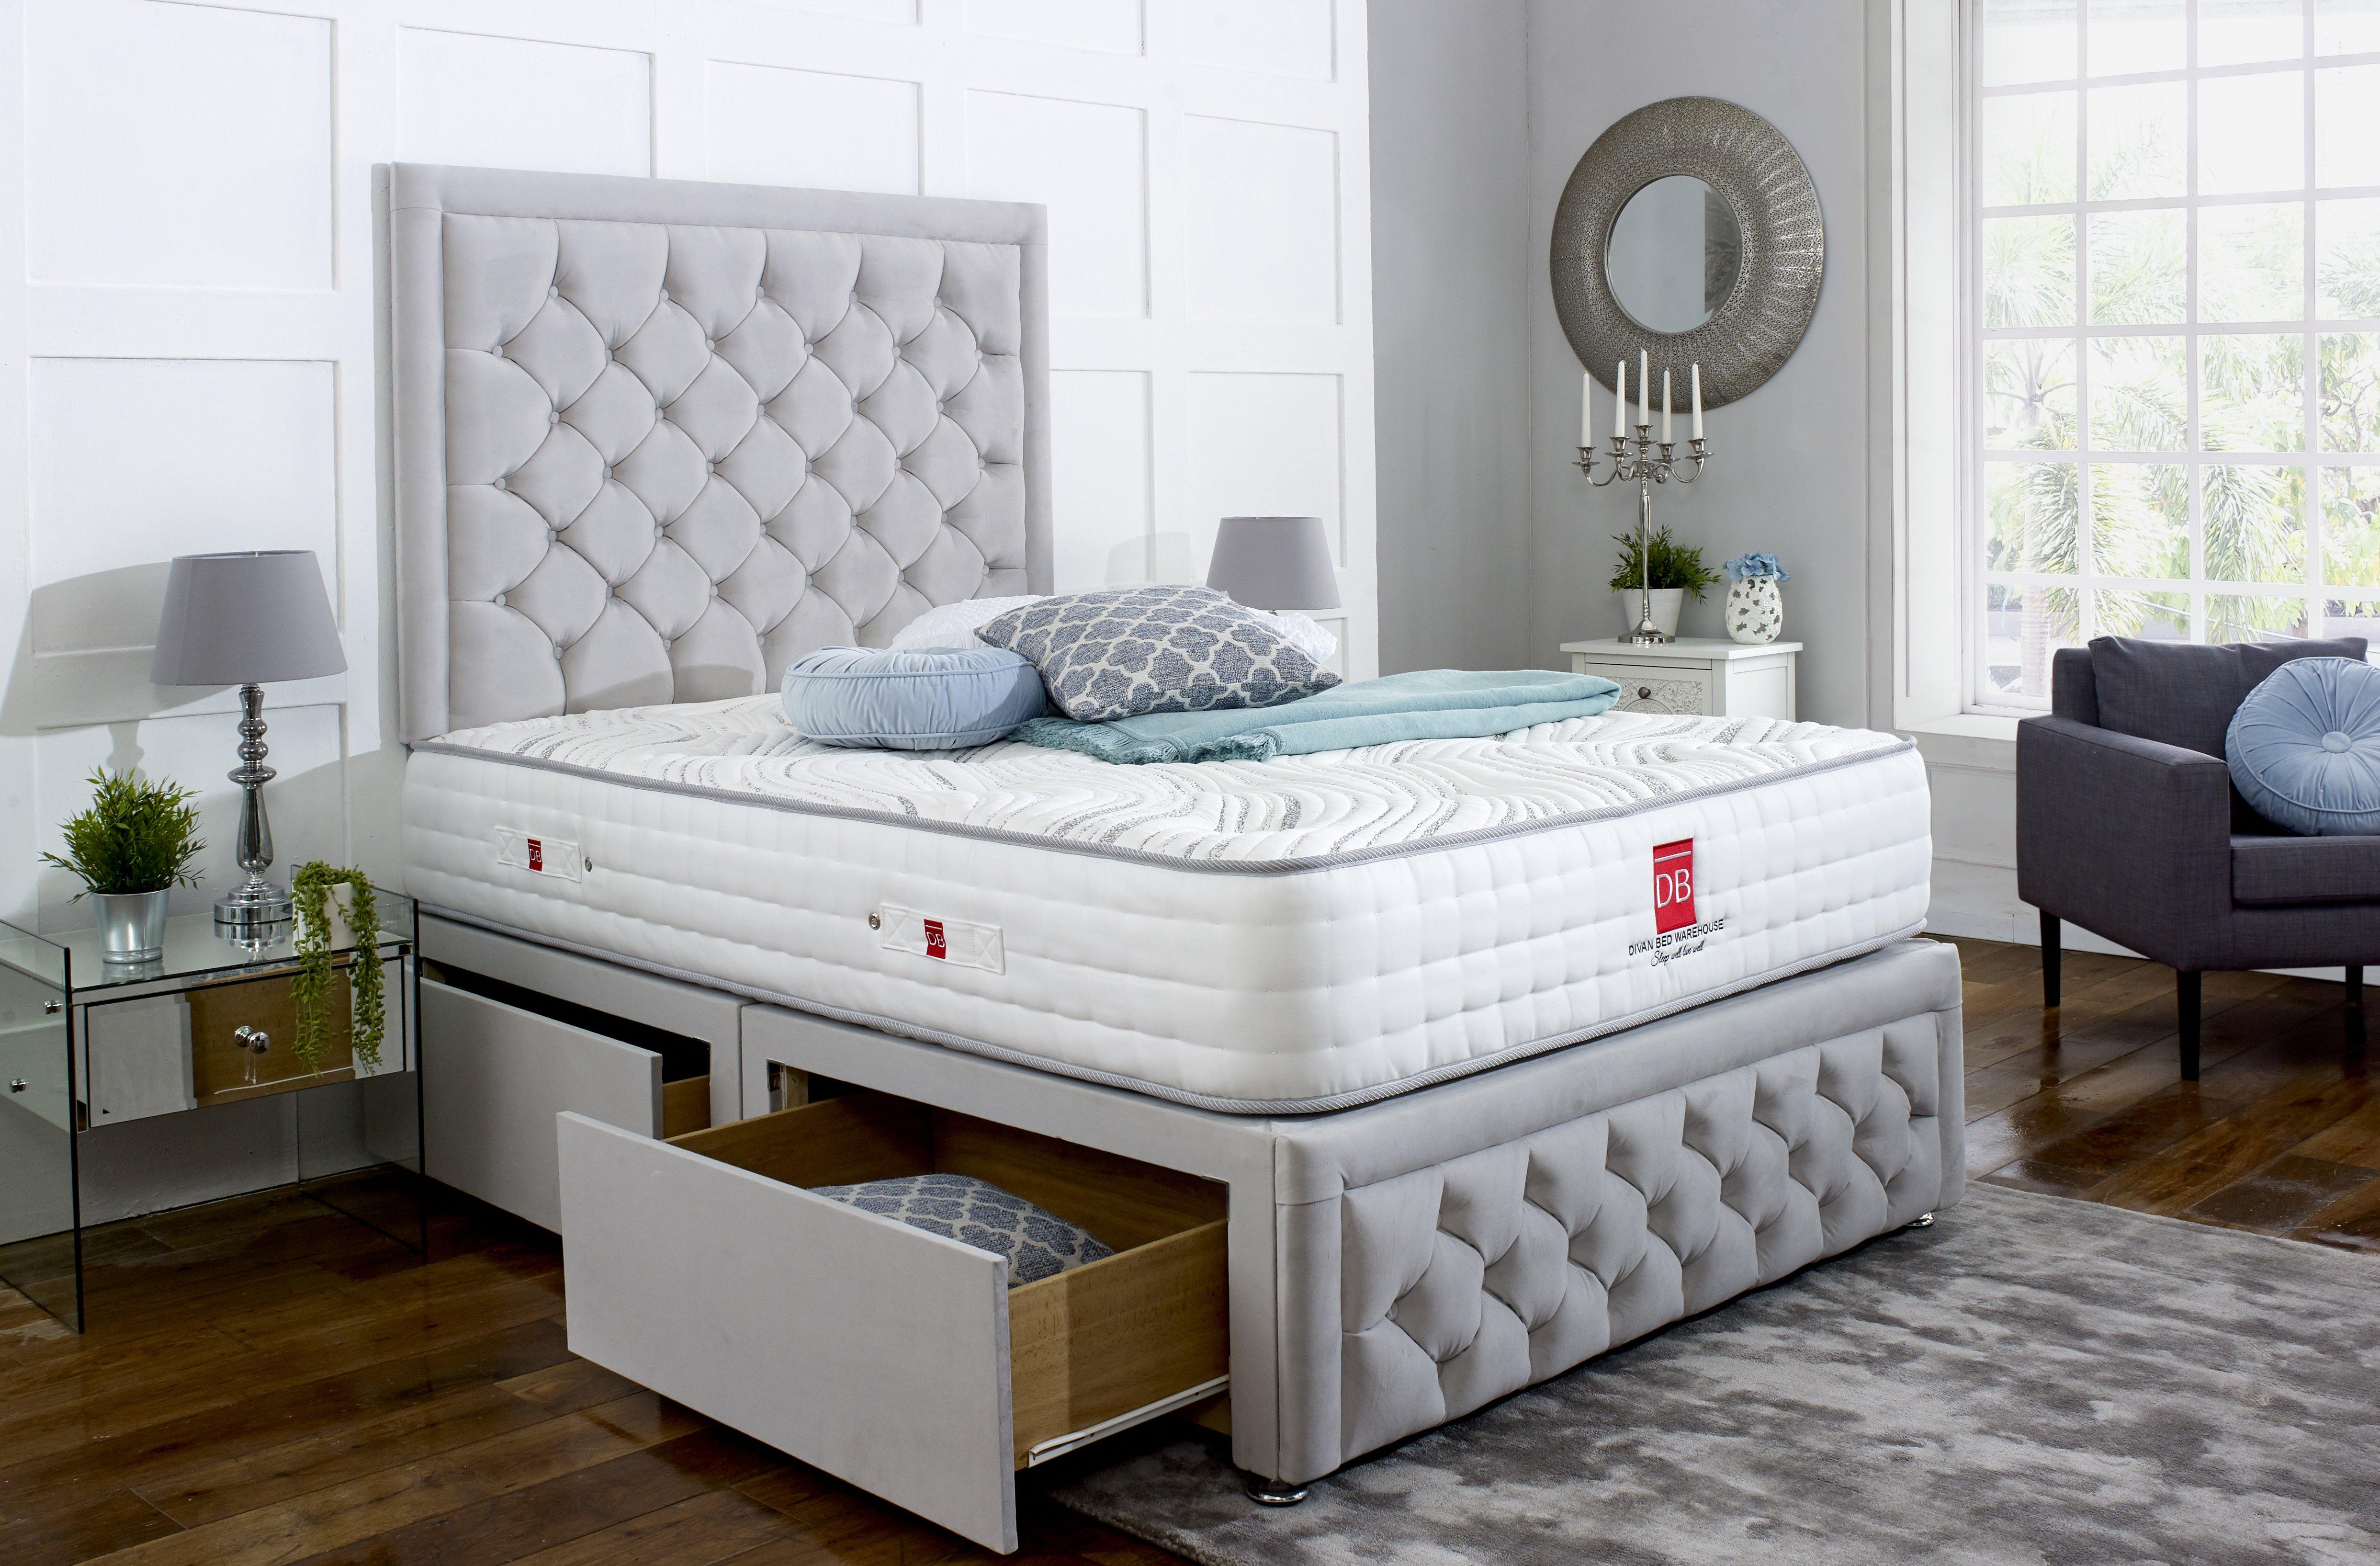 divan bed with mattress and storage